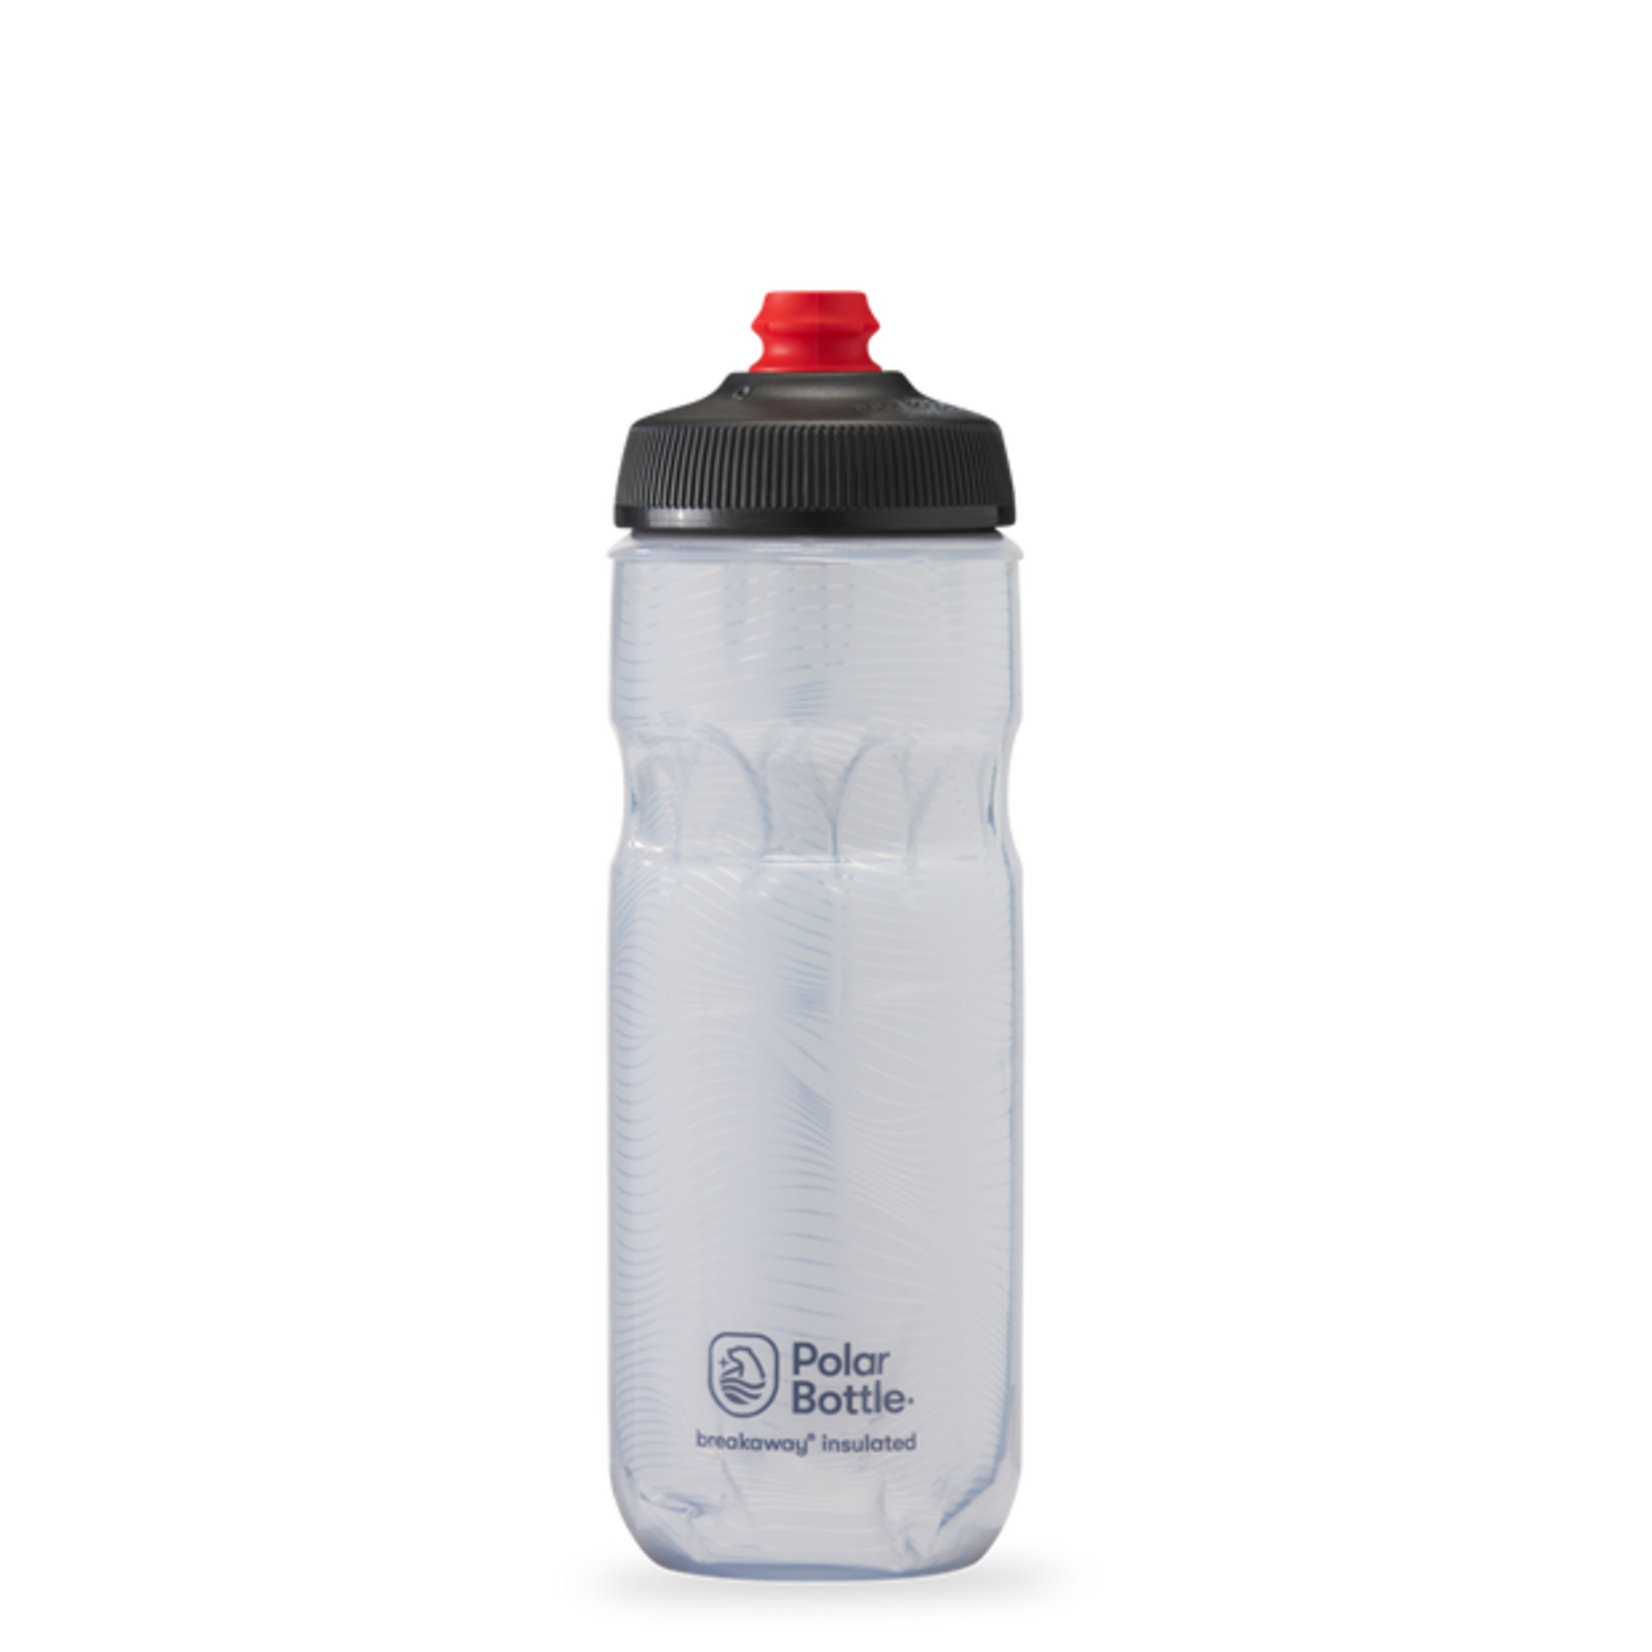 Polar Bottle Breakaway Insulated Water Bottle Char/Wht 20oz